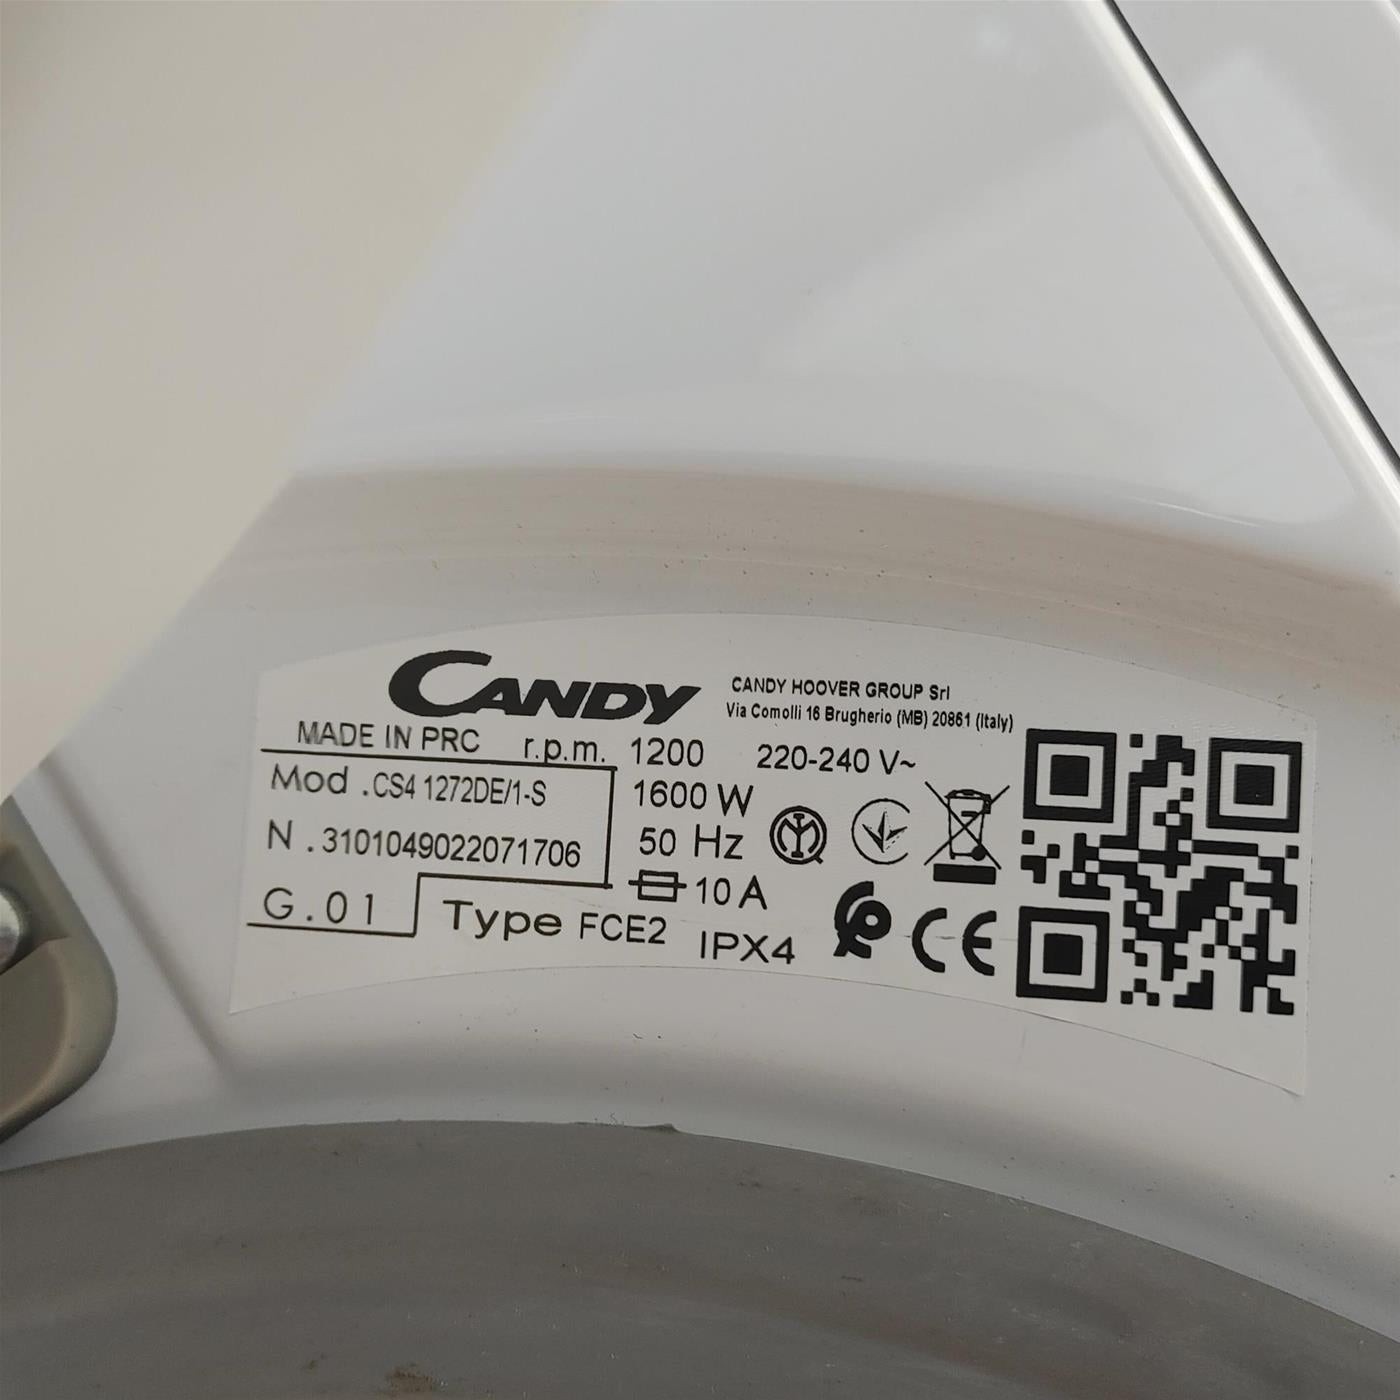 Candy Smart CS4 1272D3/1-S Lavatrice slim